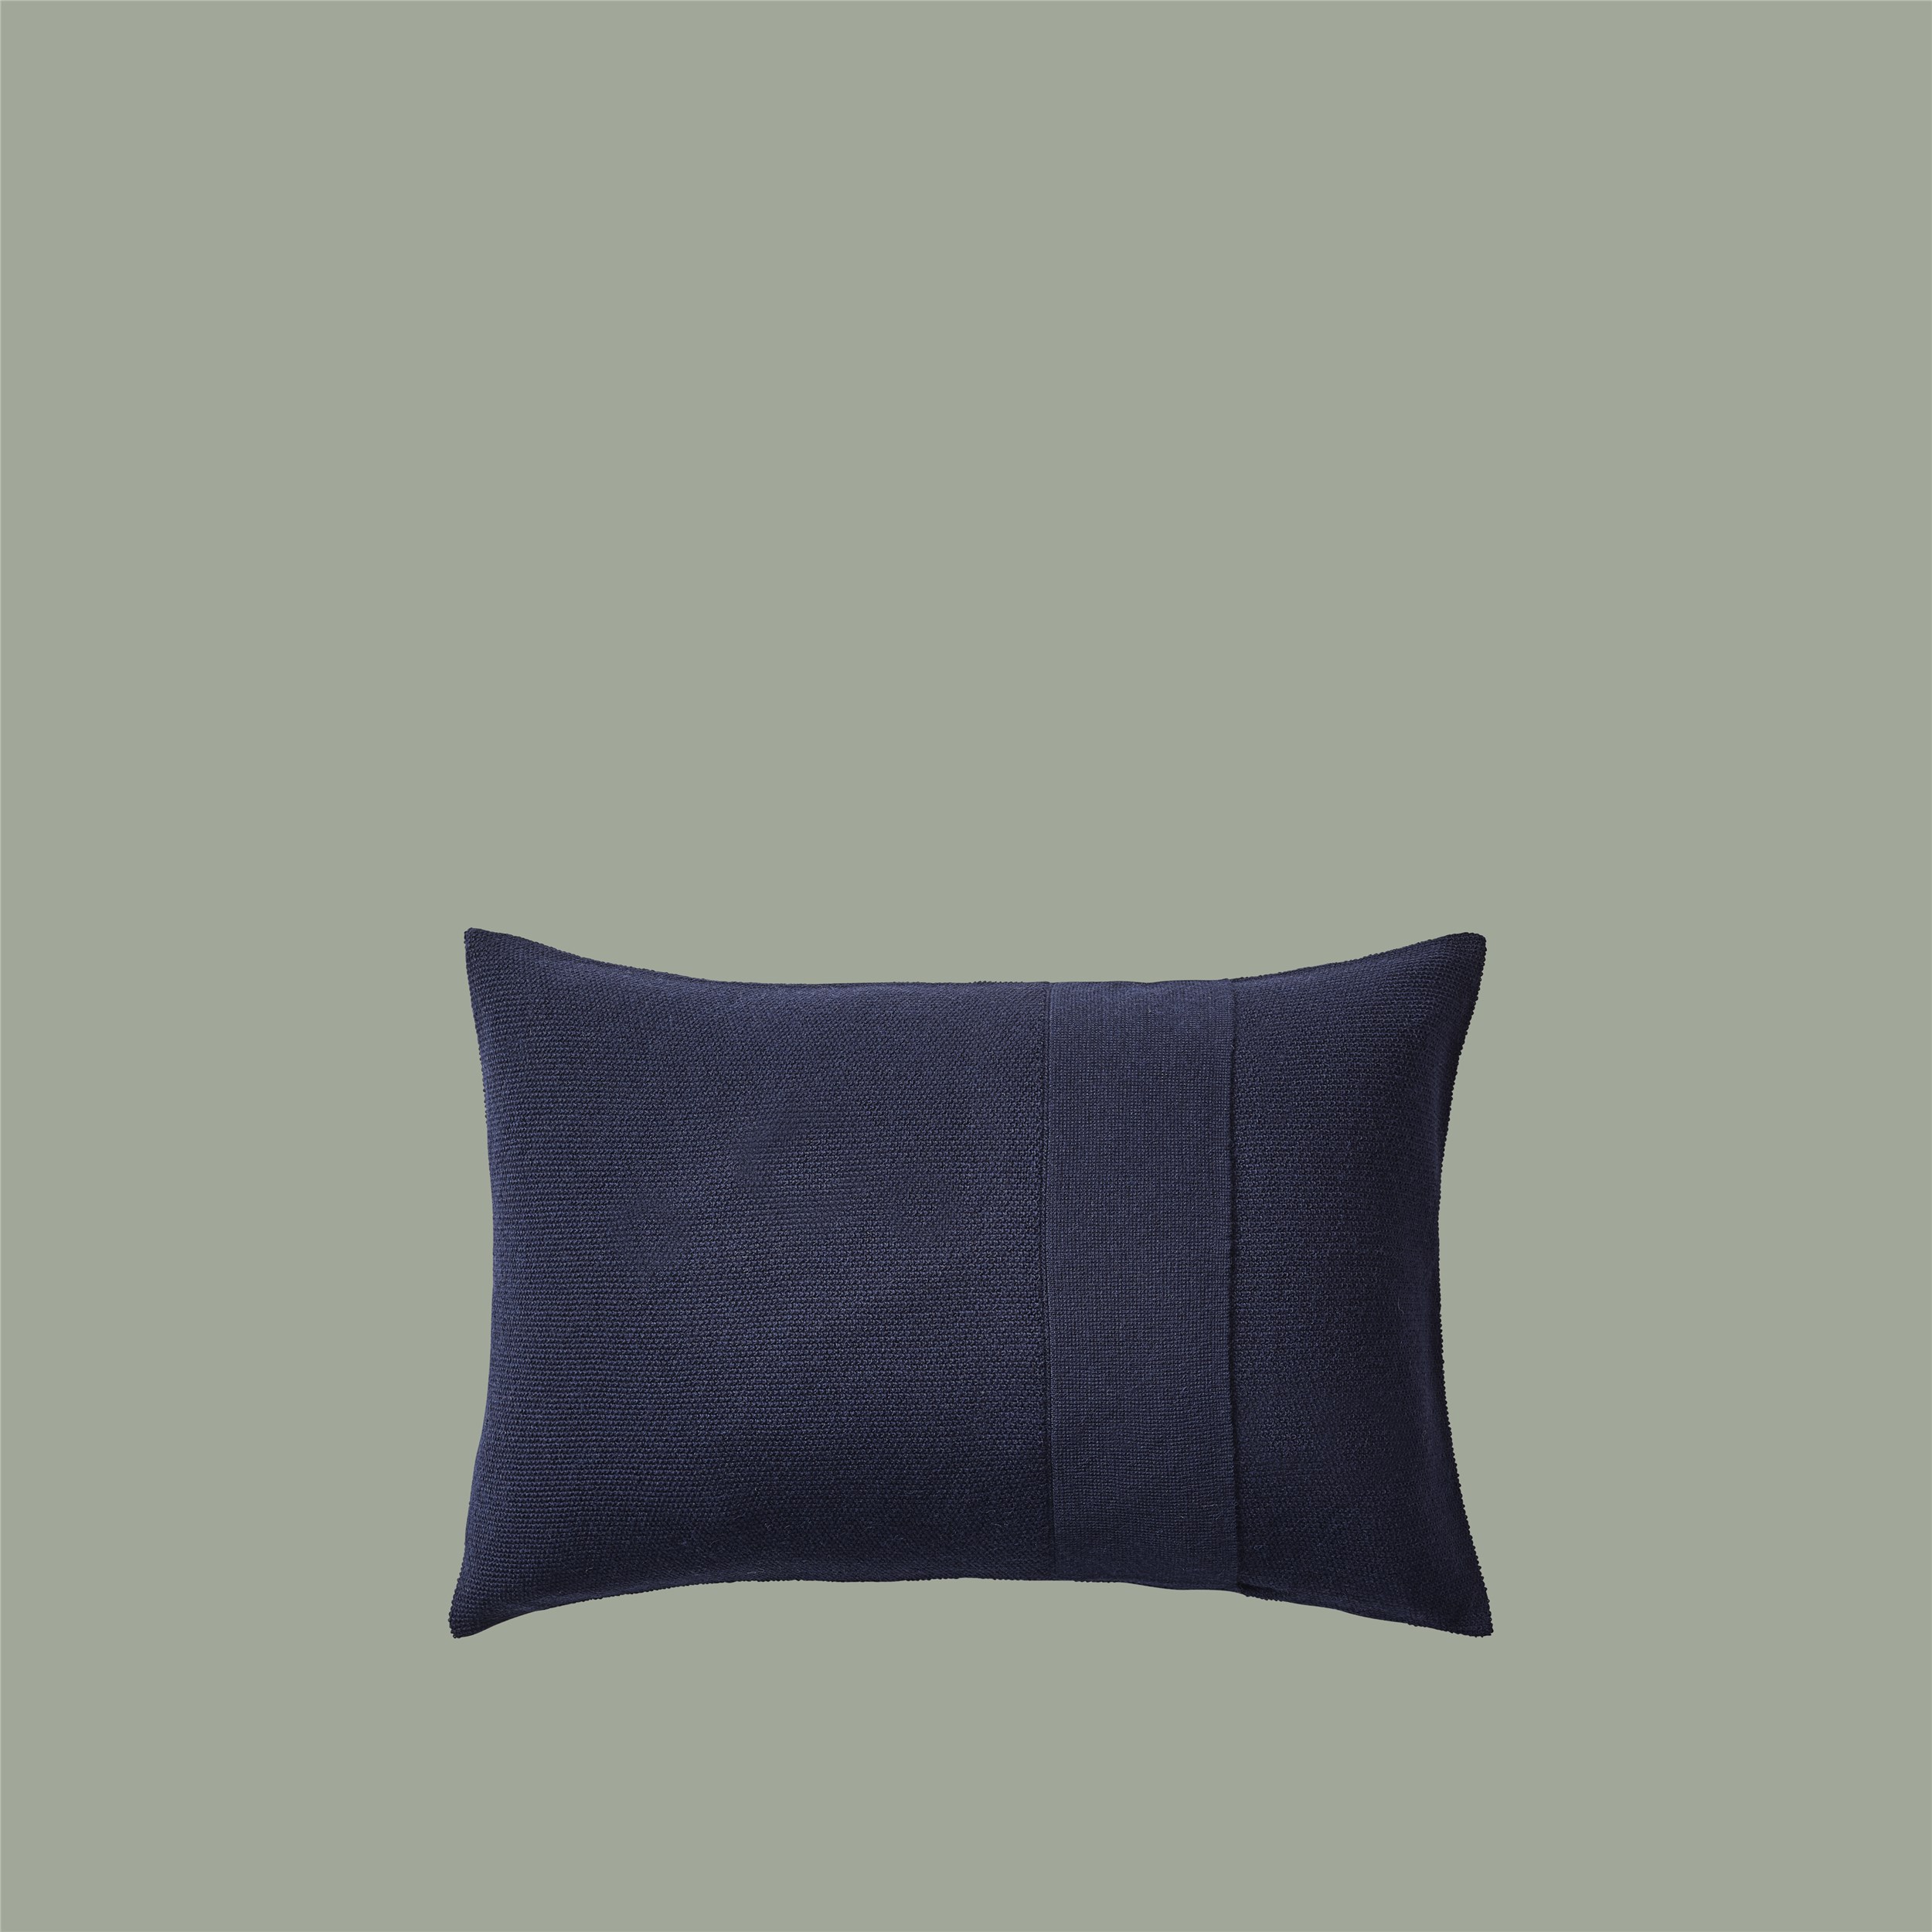 Layer Cushion 40x60 midnight blue